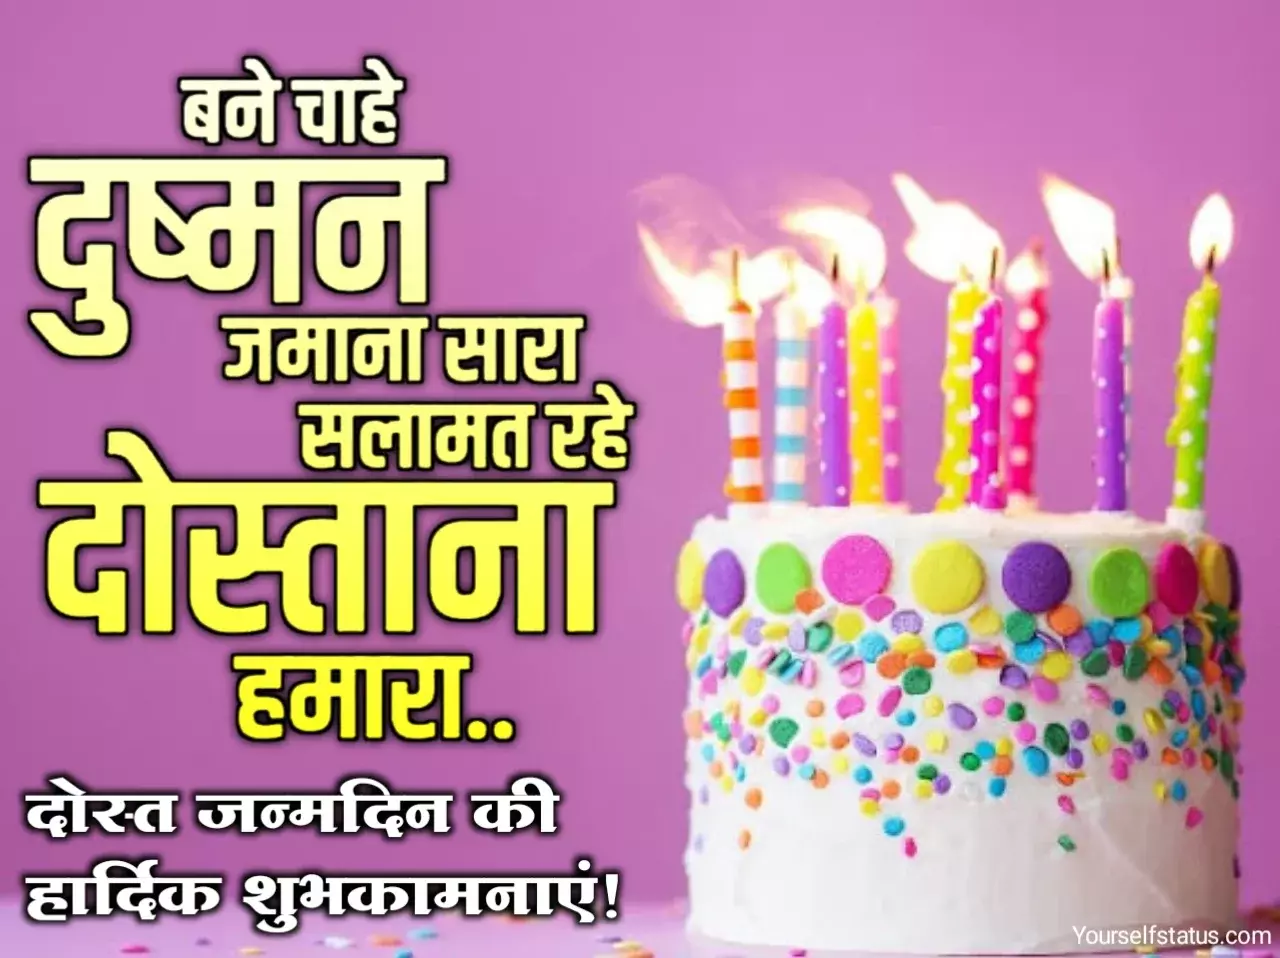 Happy birthday status for friend in hindi